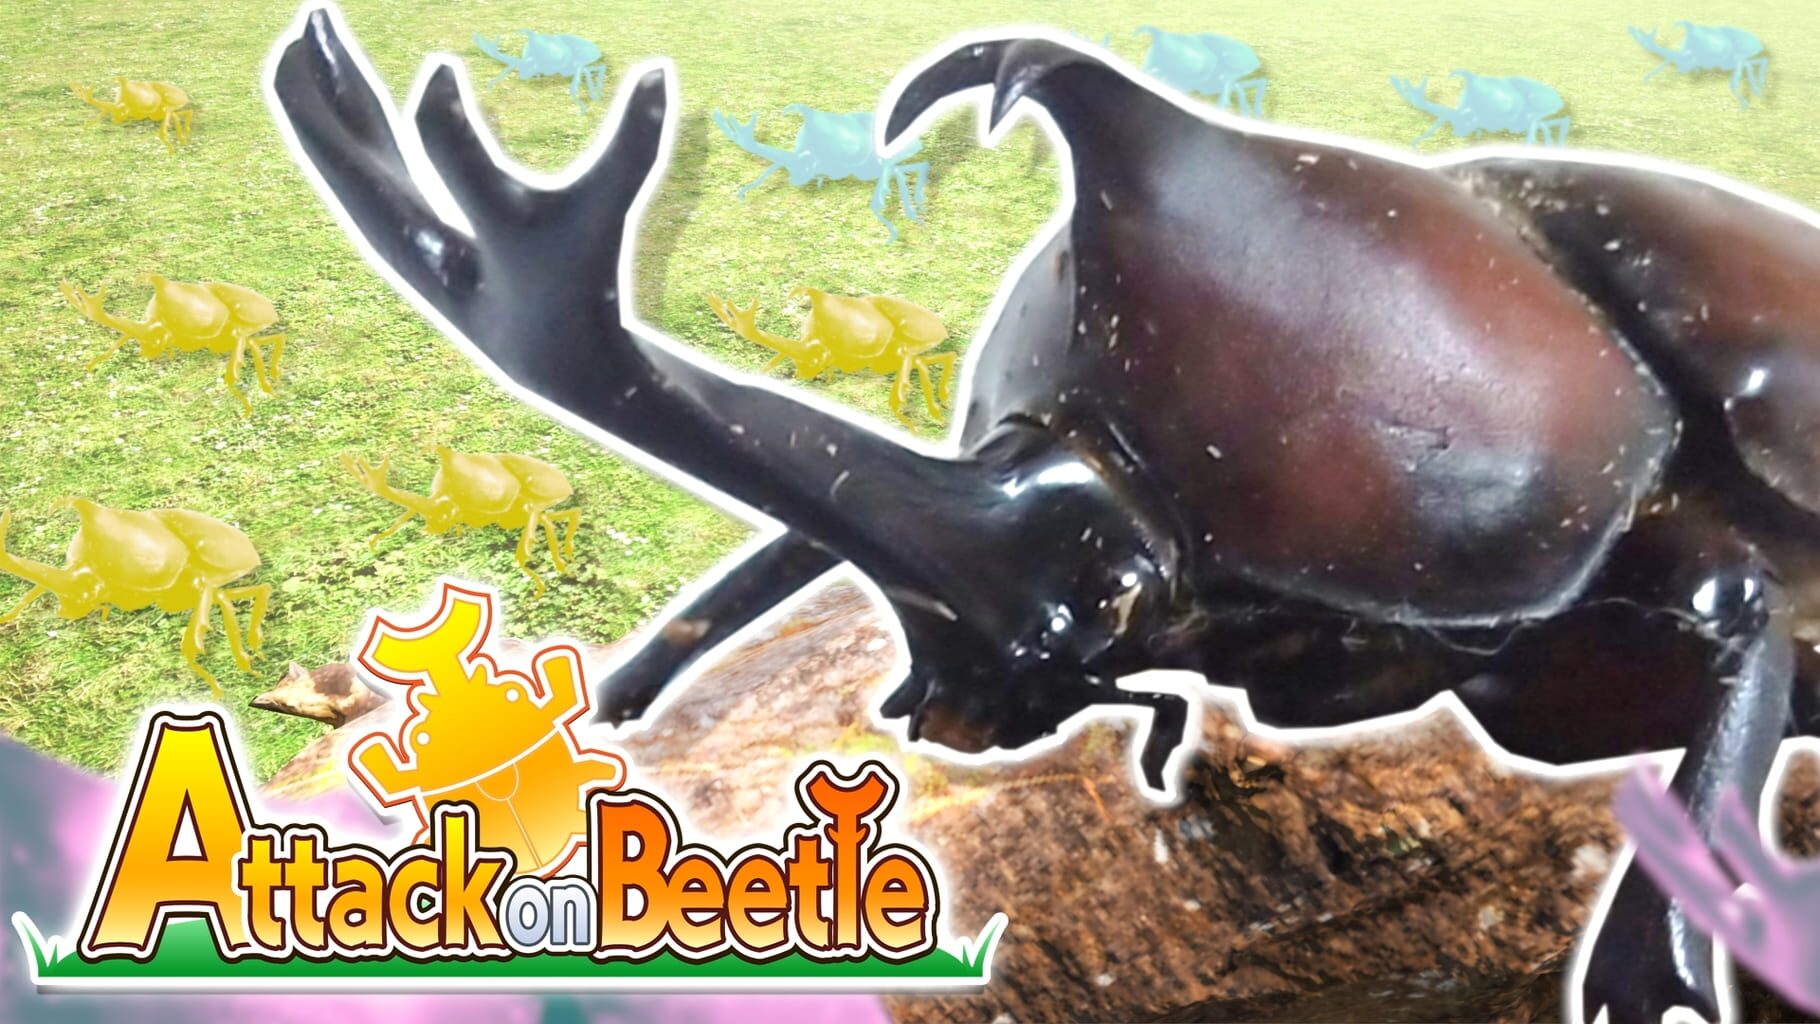 Attack on Beetle artwork